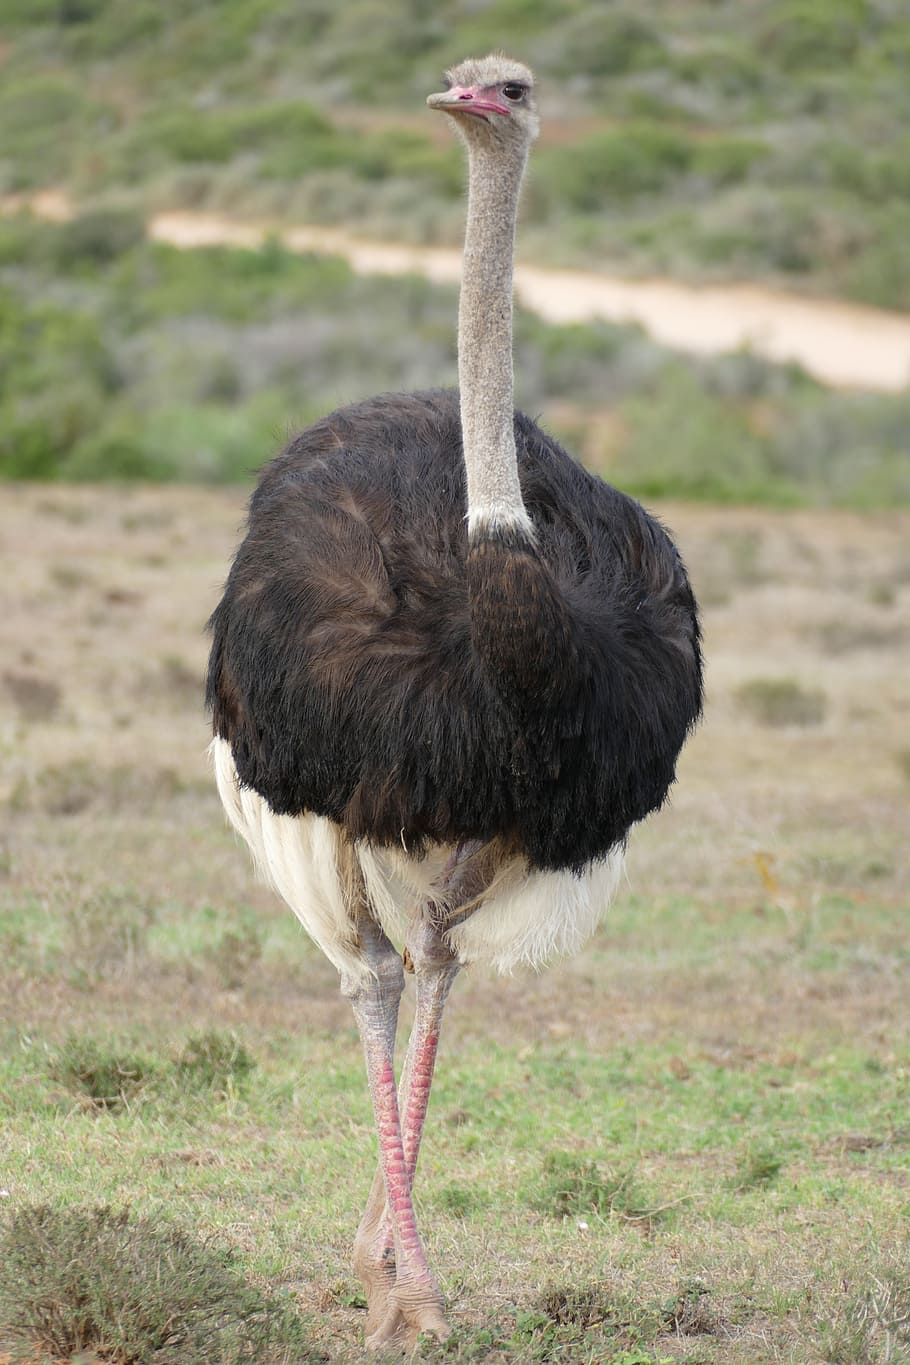 black, gray, ostrich, grass field, bouquet, south africa, bird, wildlife photography, close, animal themes